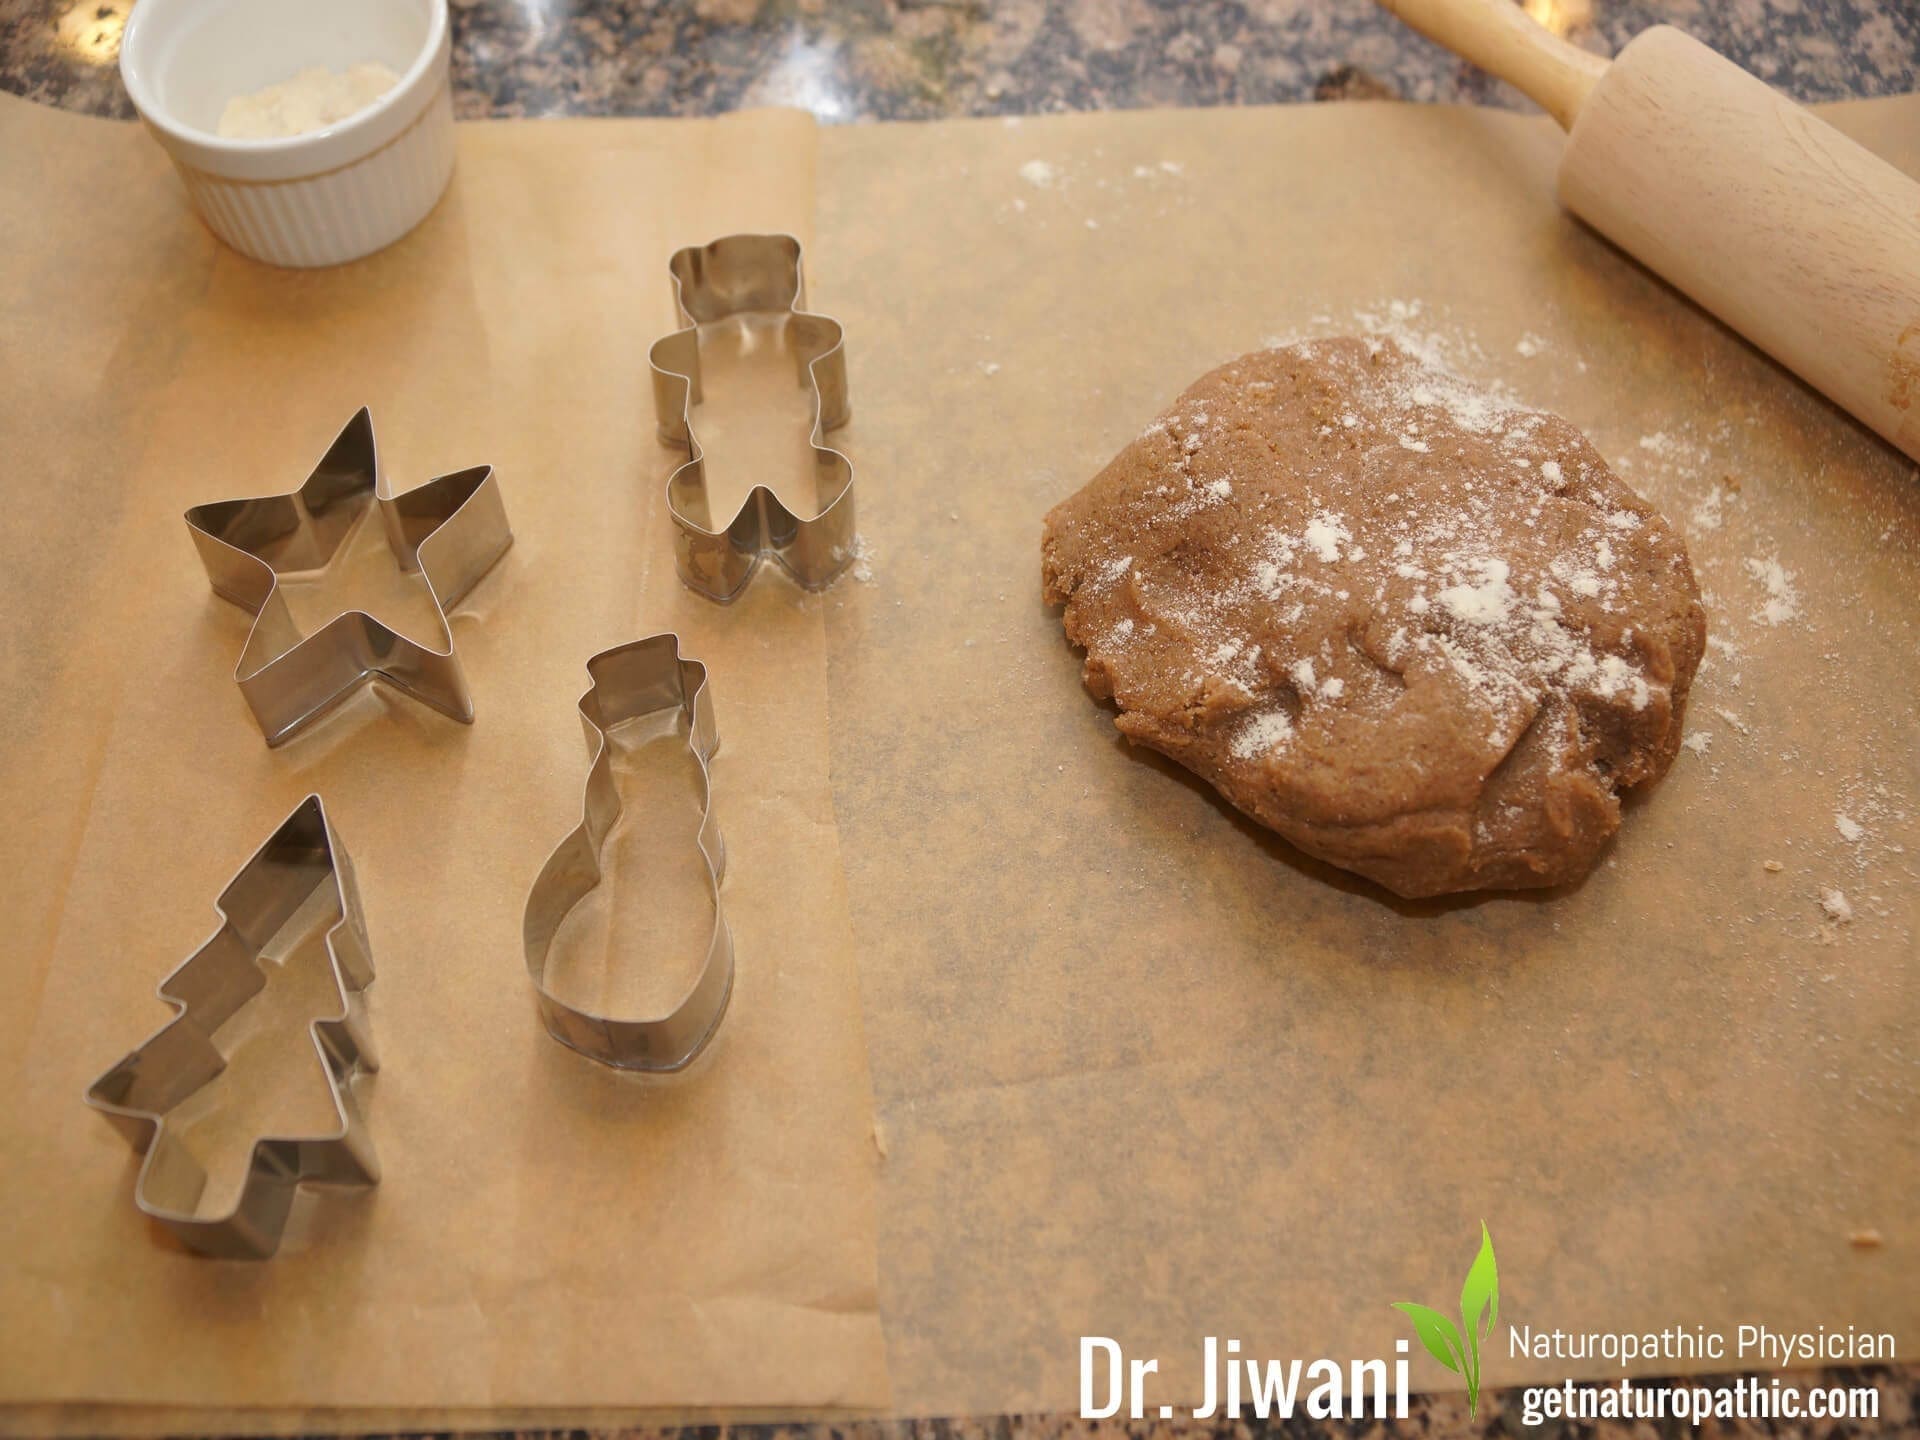 Dr.Jiwani's Paleo Vegan Grain-Free Gingerbread Cookies Recipe: Gluten-Free, Egg-Free, Dairy-Free, Soy-Free, Sugar-Free, Corn-Free, Ideal For Diabetic, Paleo, Keto, Vegan & Candida Diets | Dr. Jiwani's Naturopathic Nuggets Blog